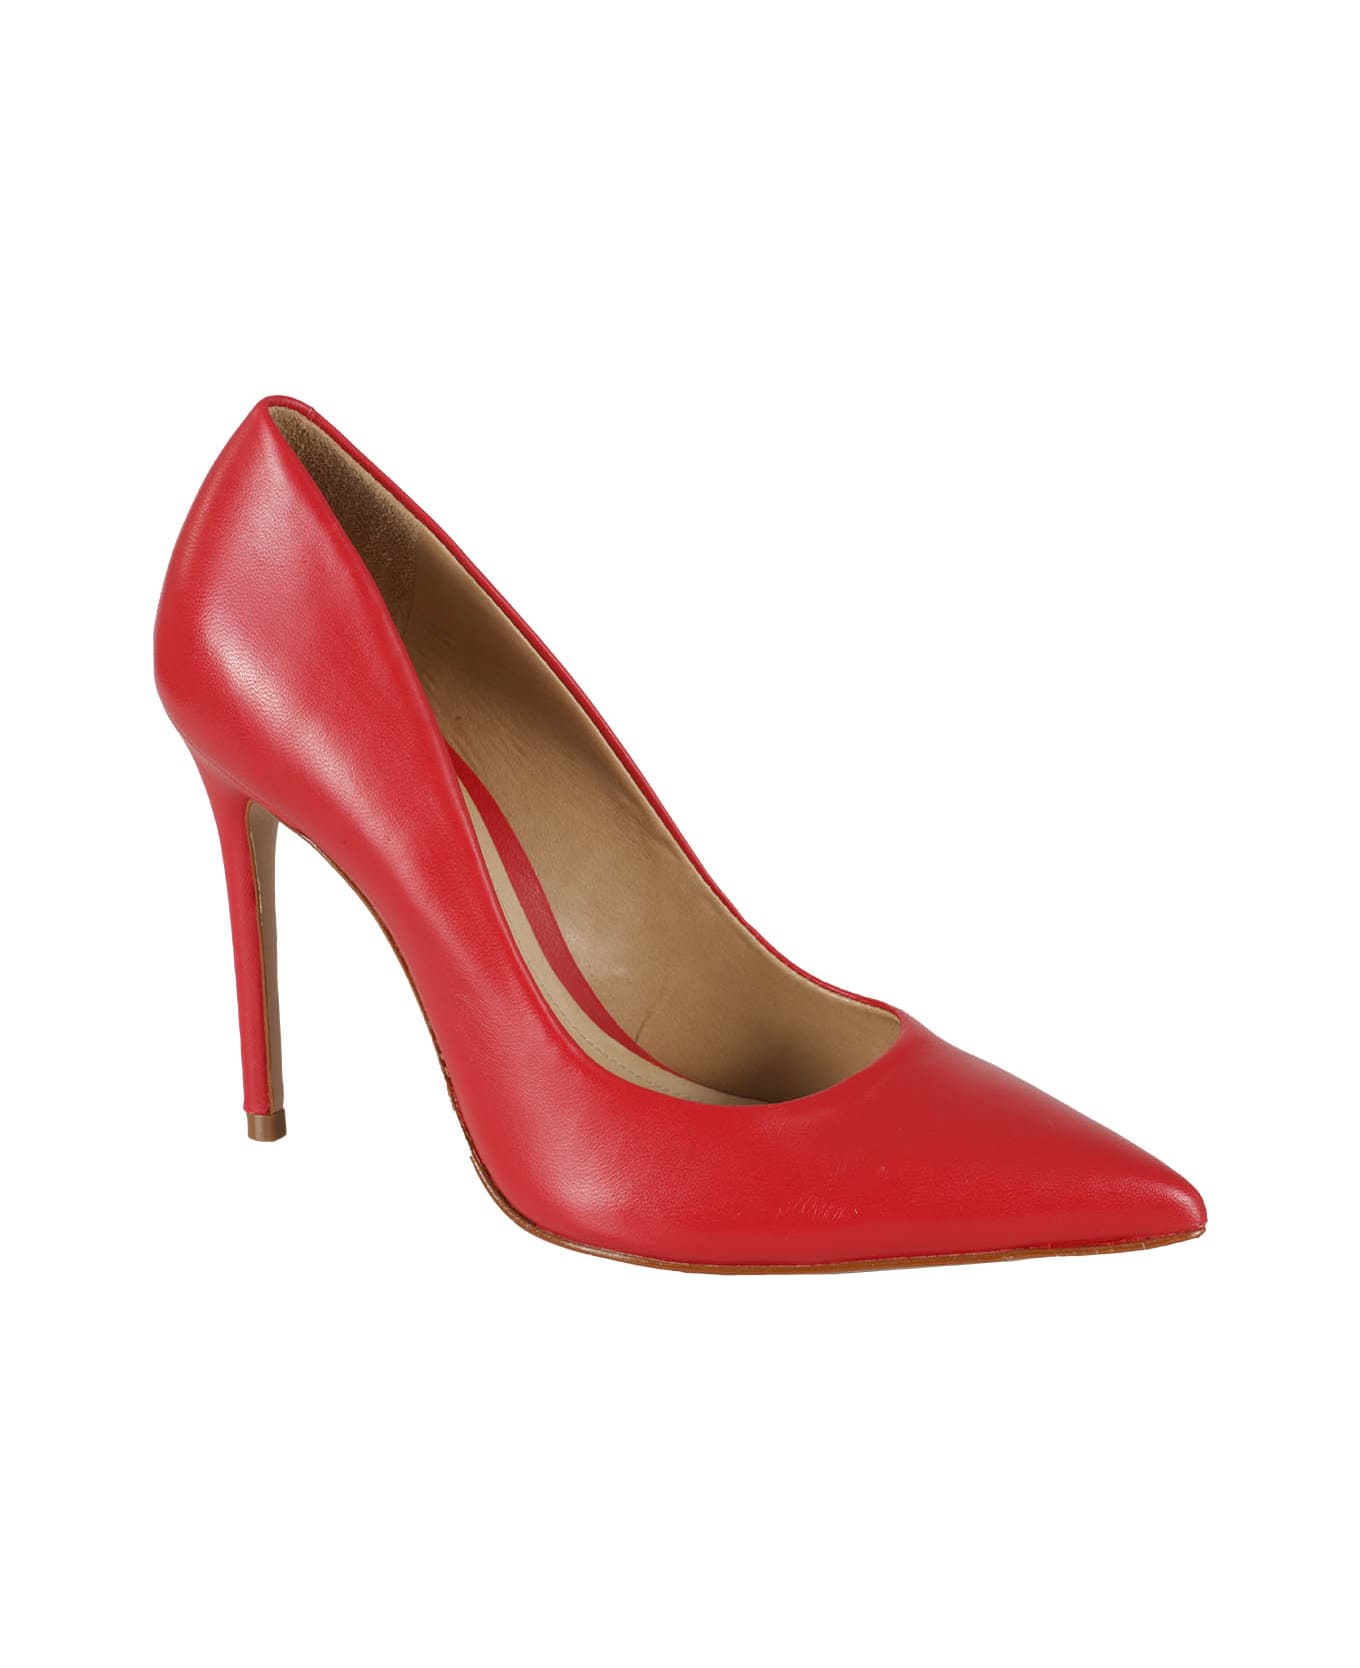 Schutz Shoes - Red